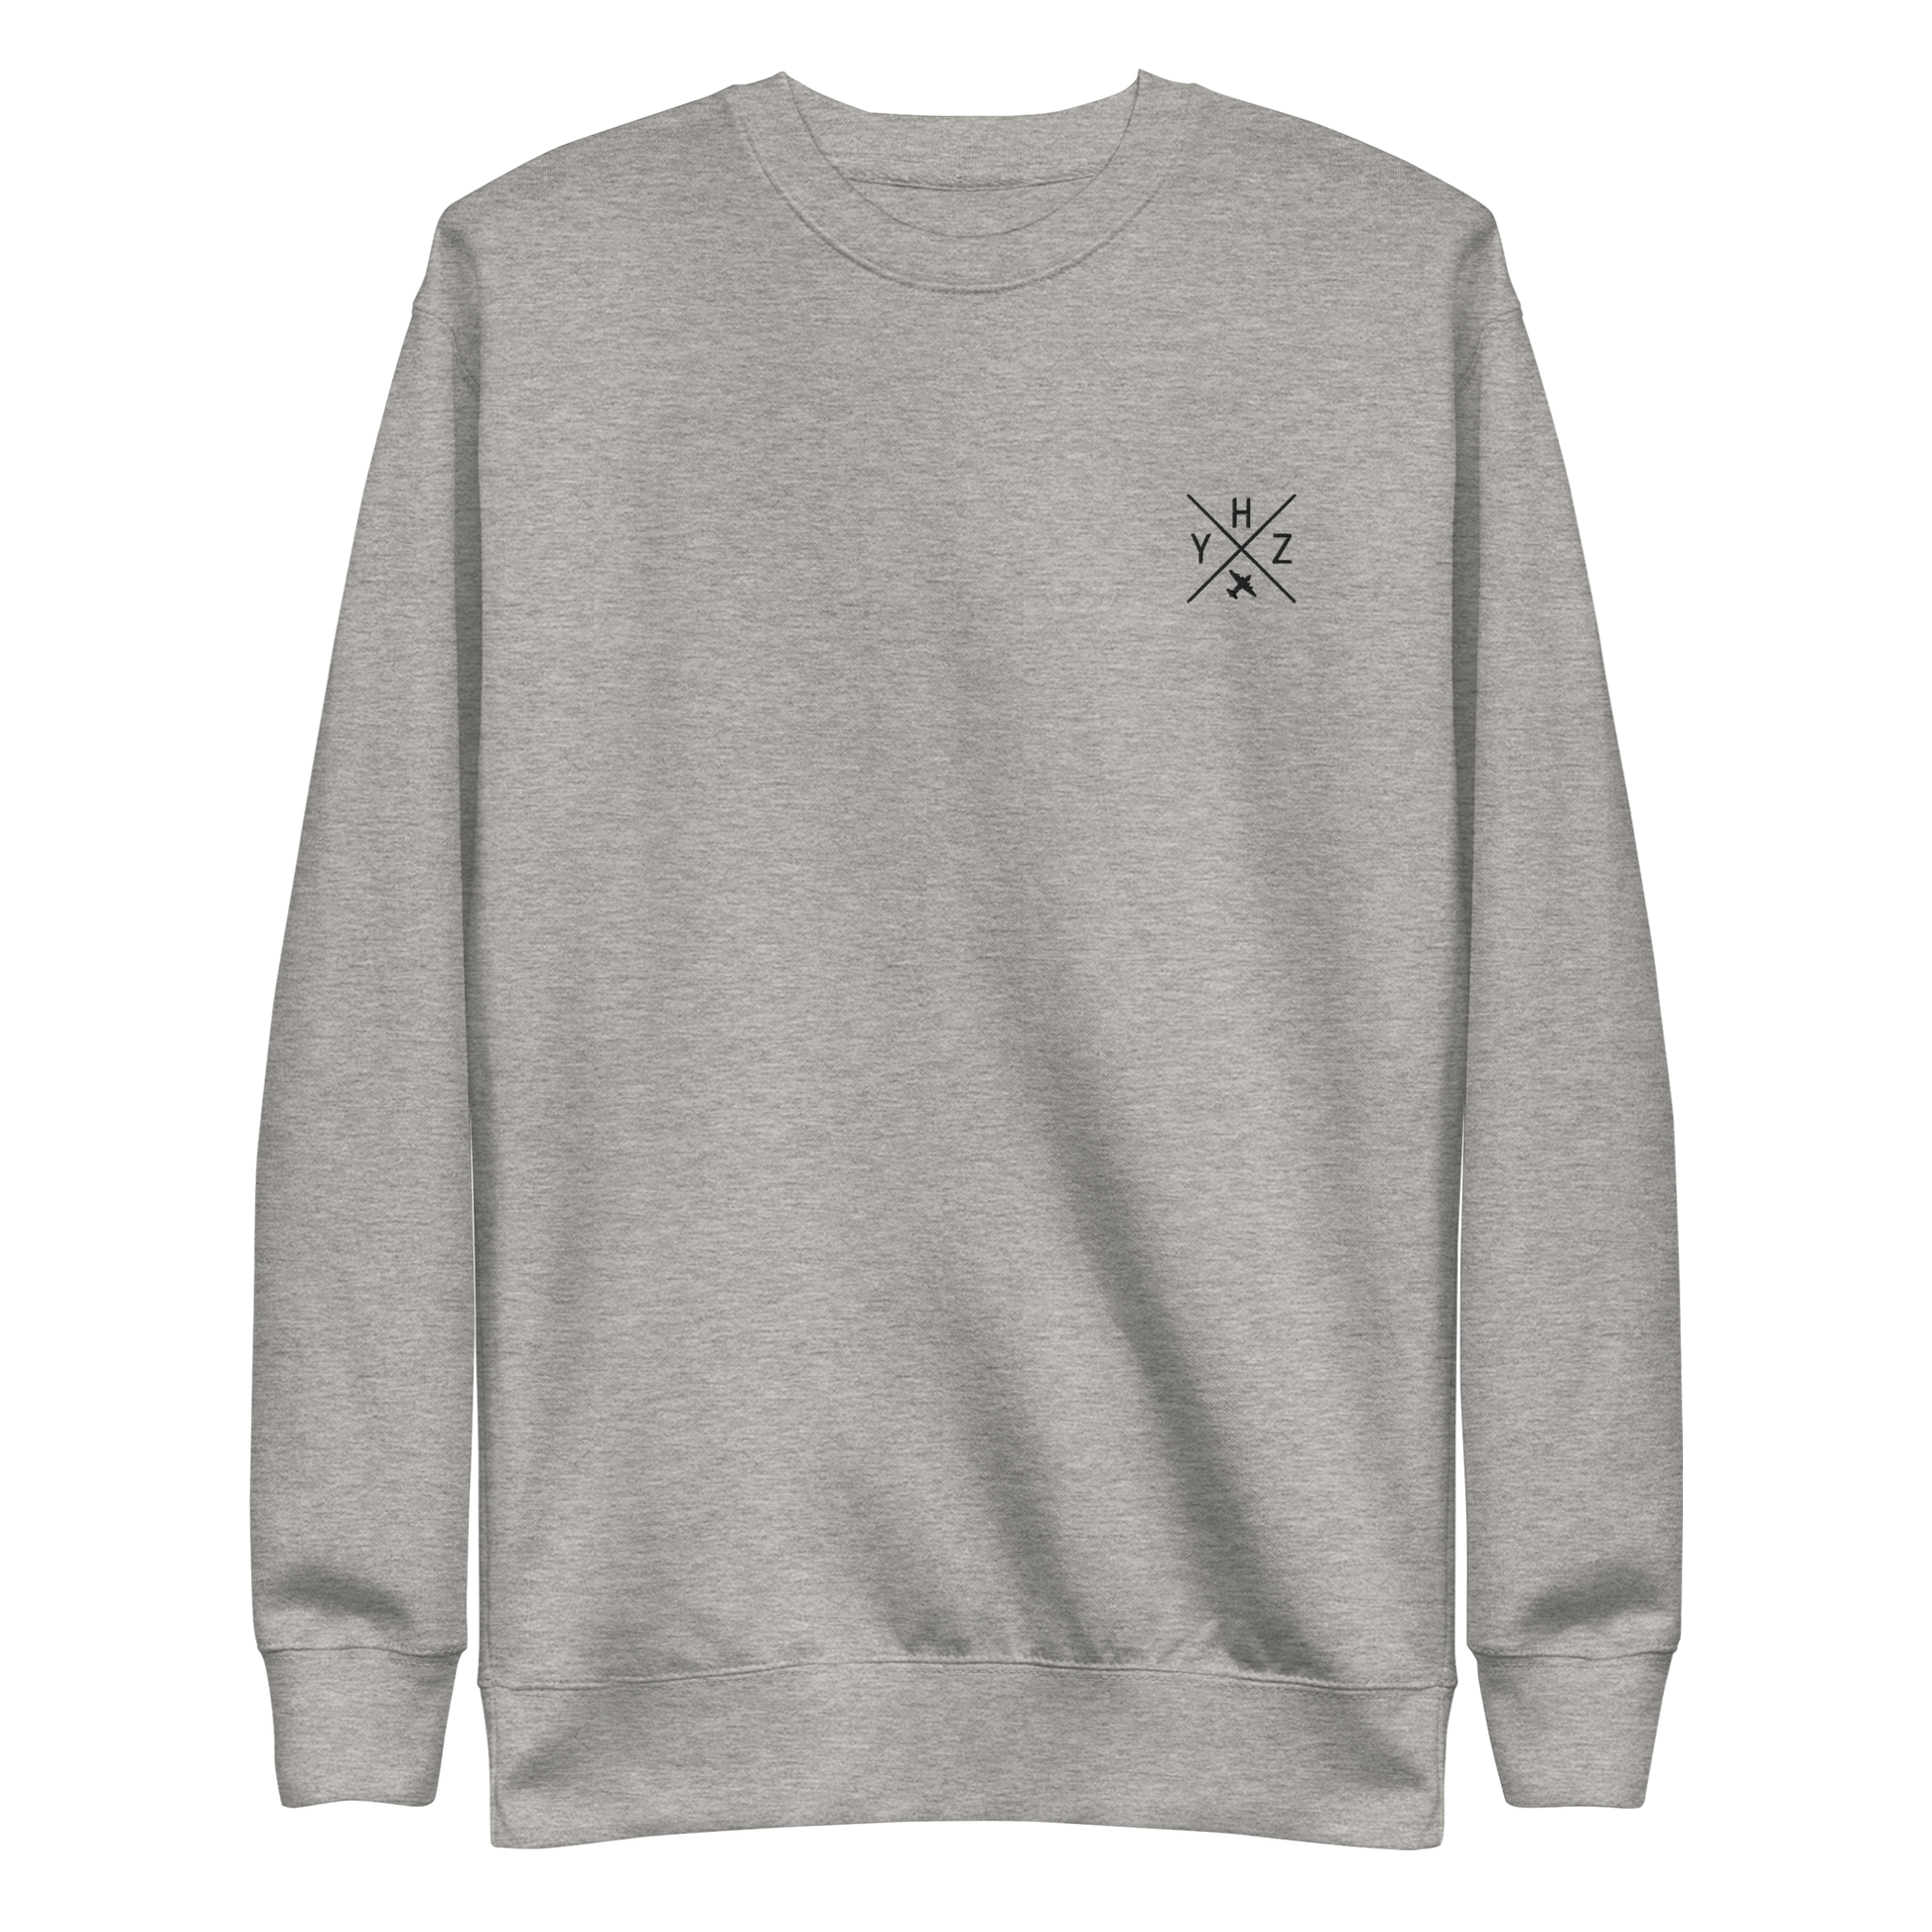 YHM Designs - YHZ Halifax Premium Sweatshirt - Crossed-X Design with Airport Code and Vintage Propliner - Black Embroidery - Image 02